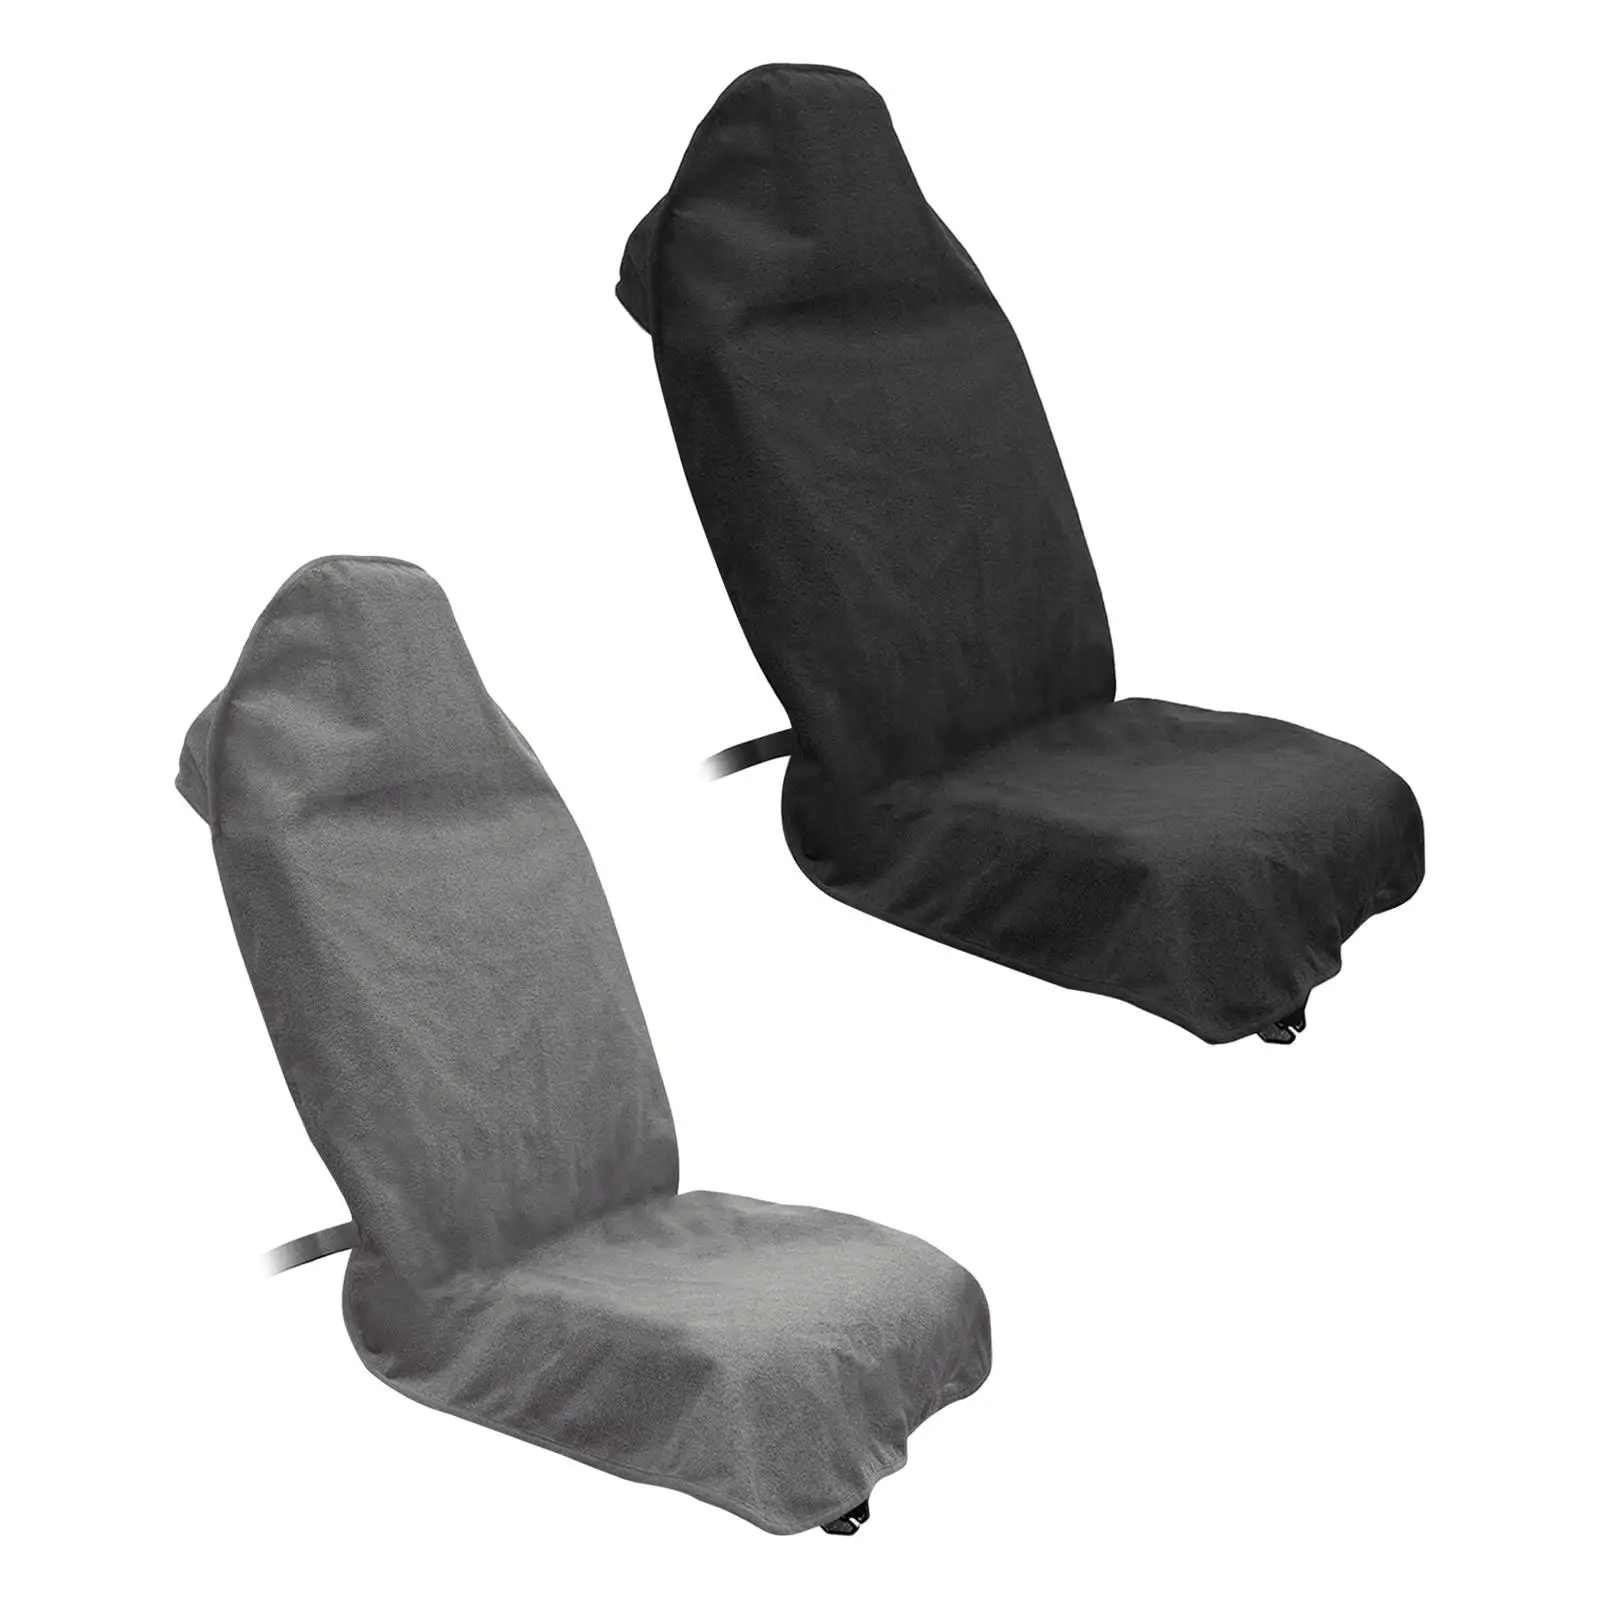 Car Seat Cover Machine Washable Anti Slip Sweatproof Waterproof Car Seat Cushion for Running Beach Hiking Trucks Front Seat